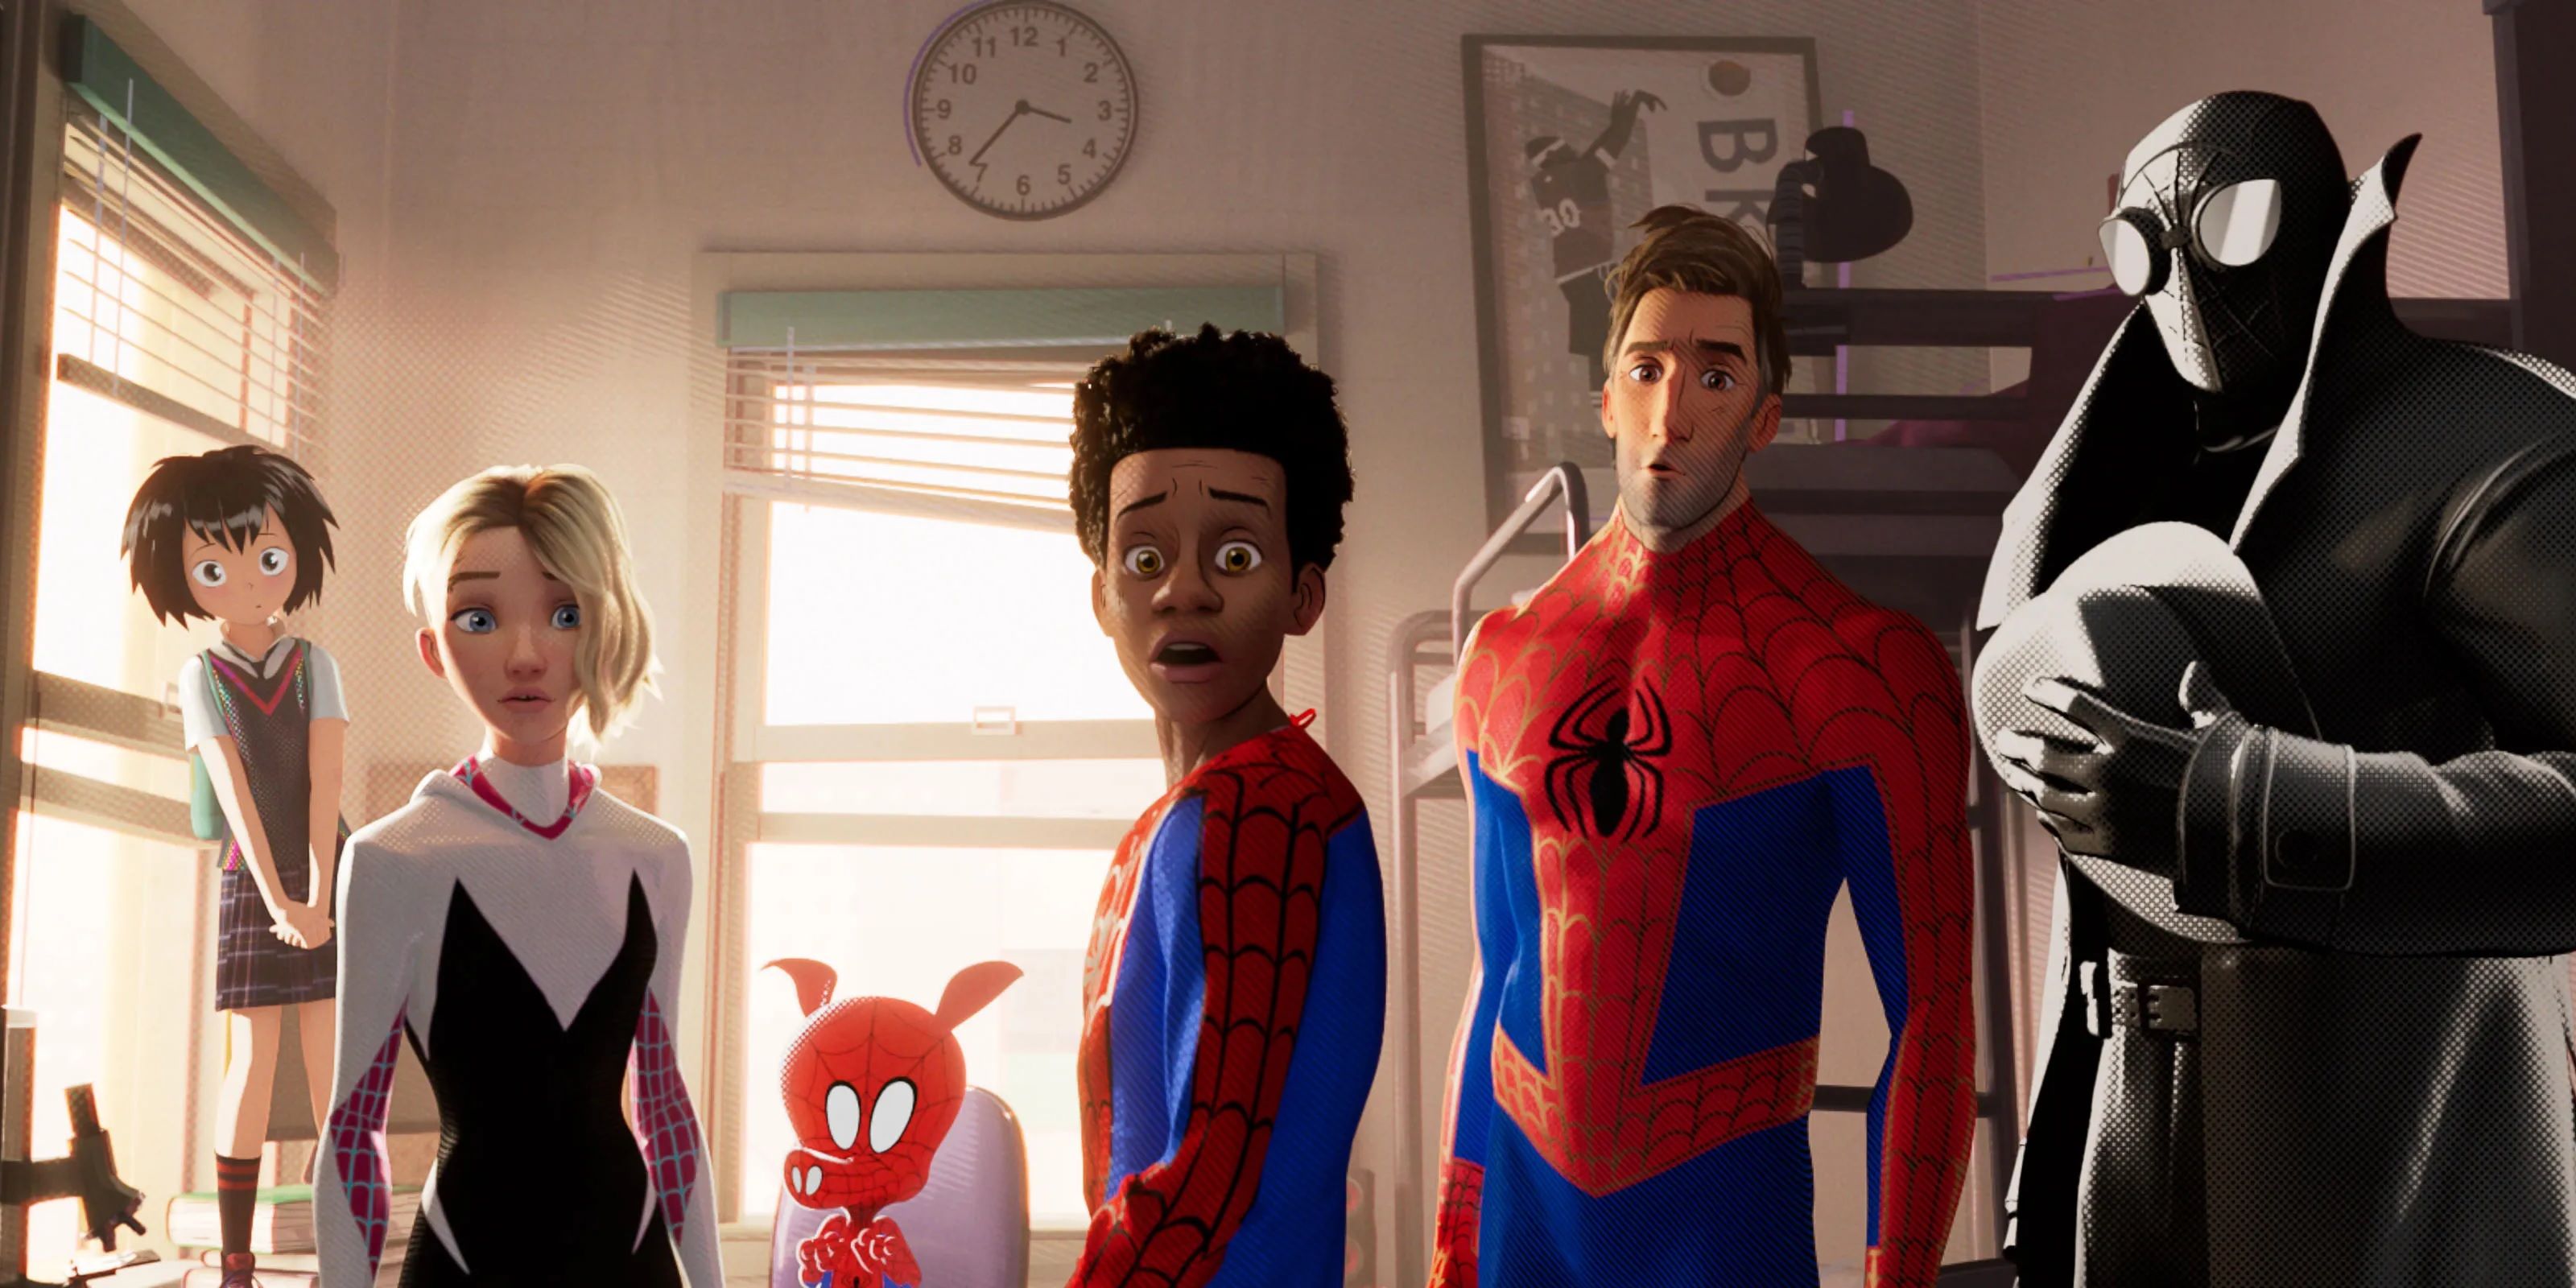 Meet the Voice Actors of Spider-Man 2's Cast